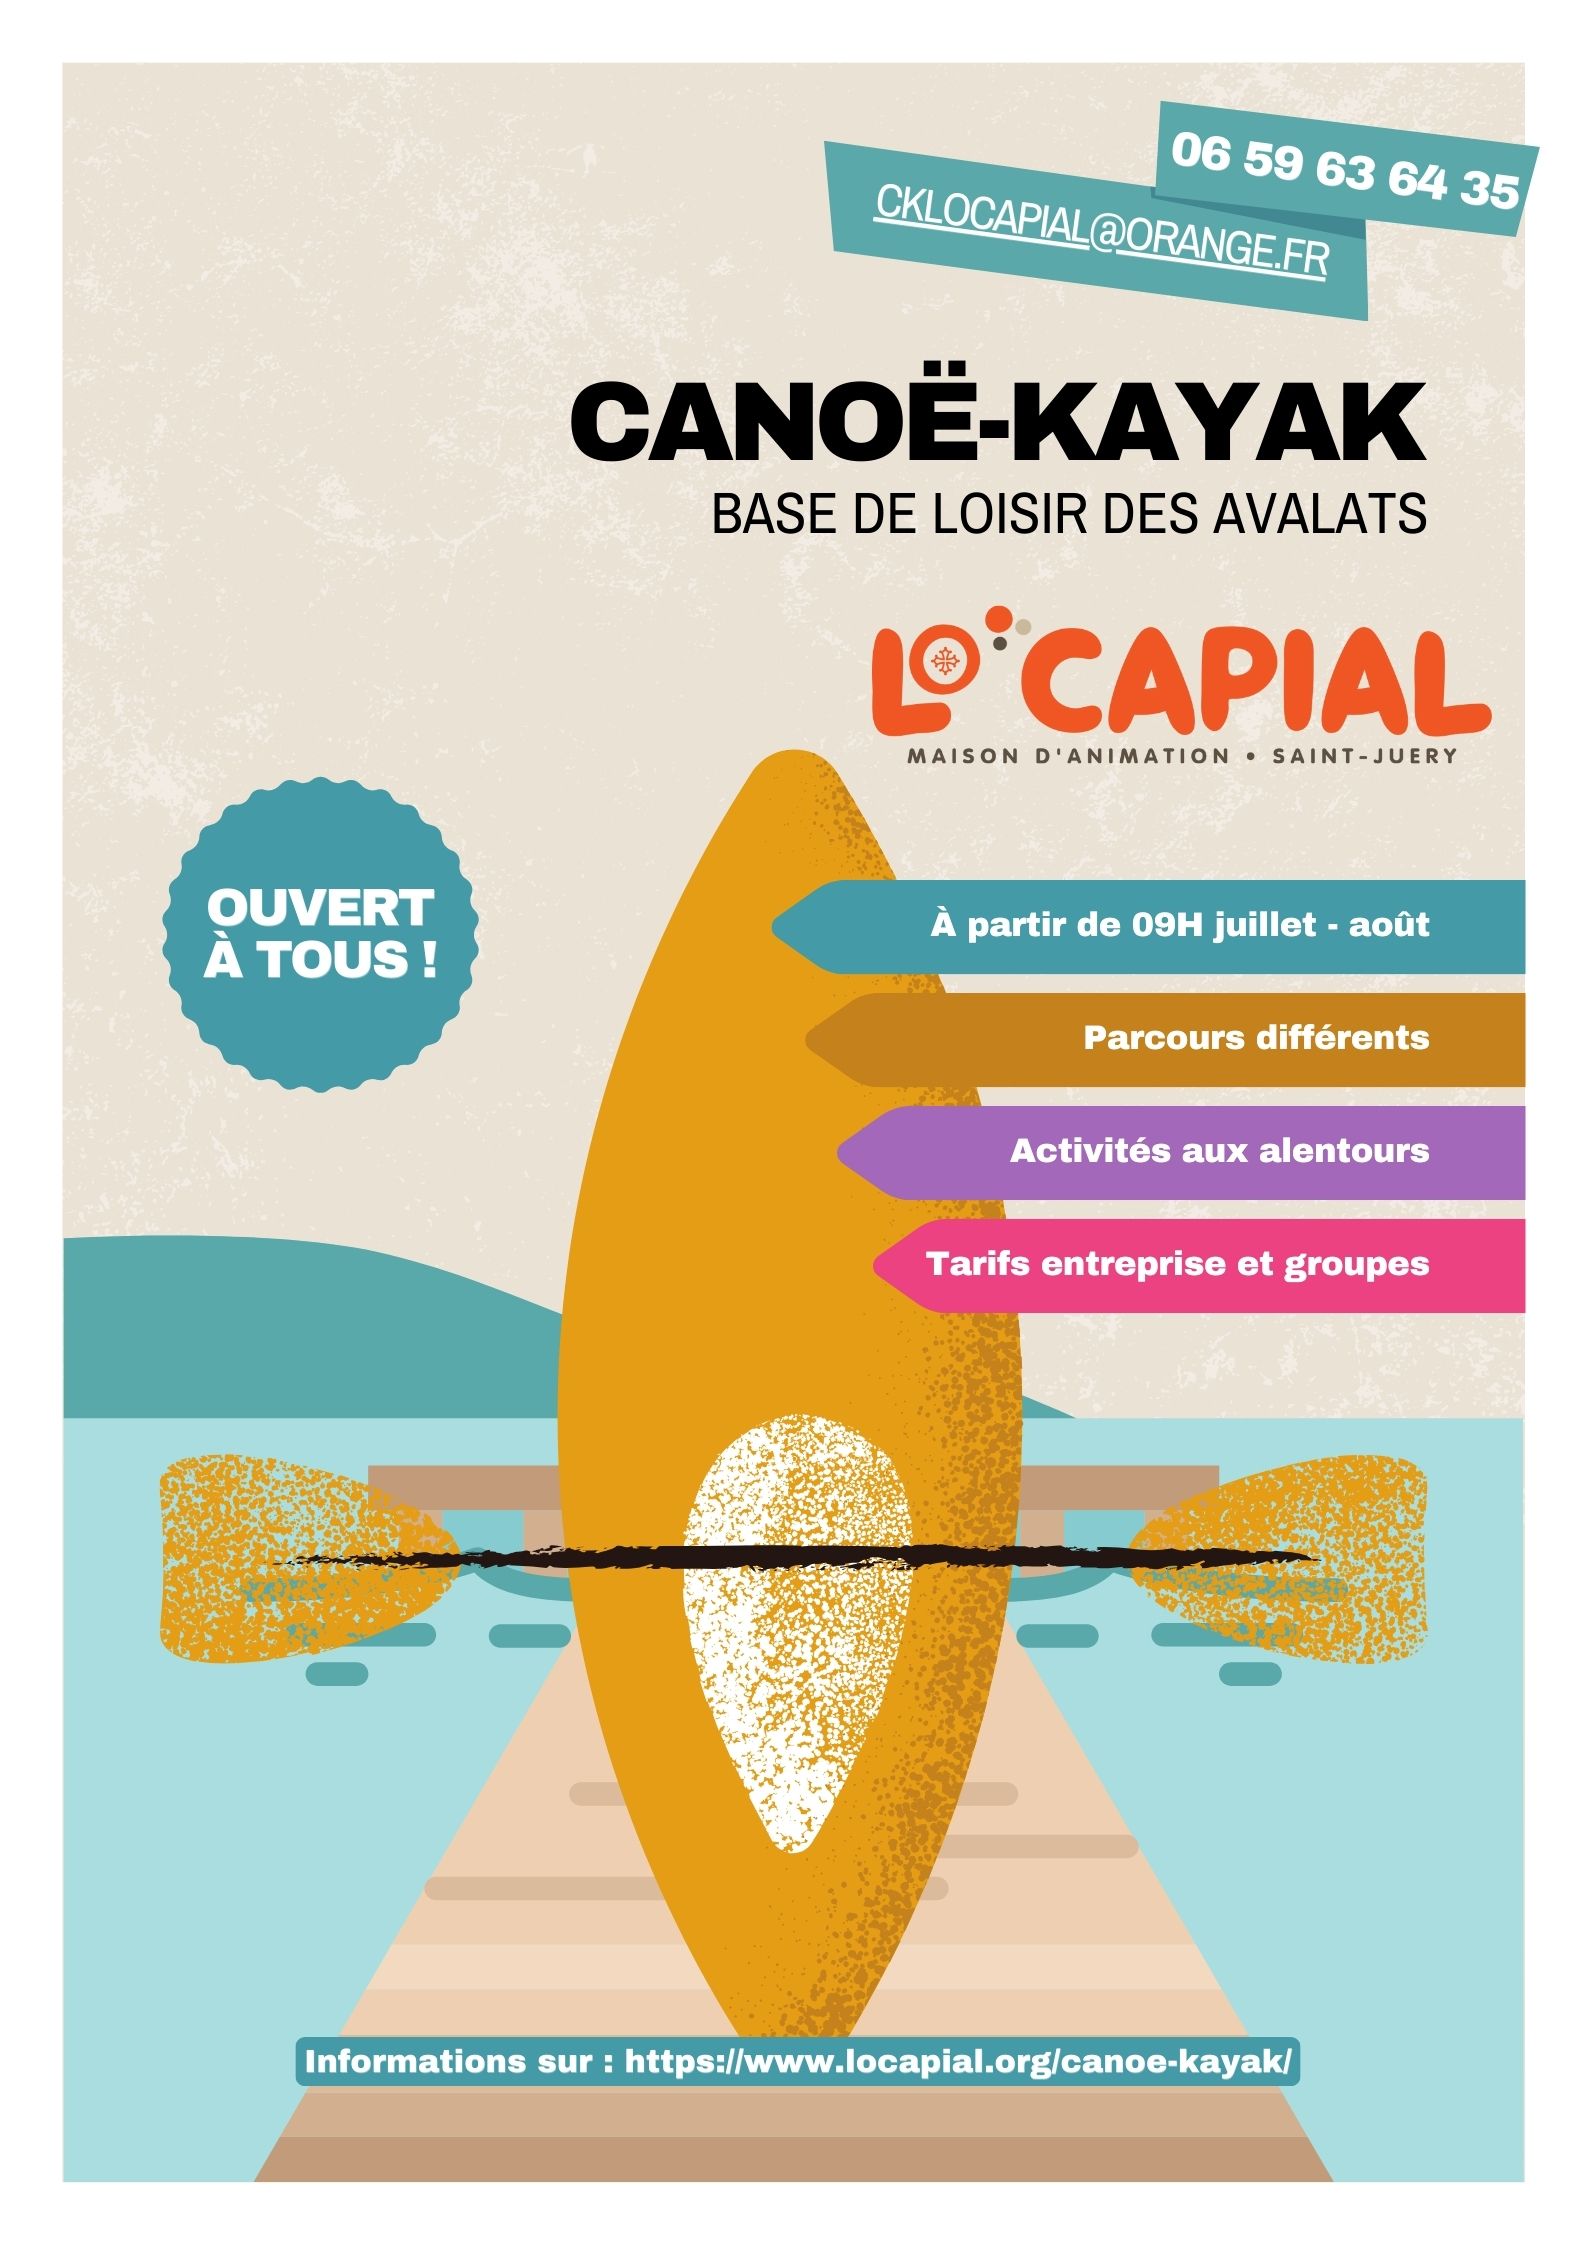 Canoë-kayak